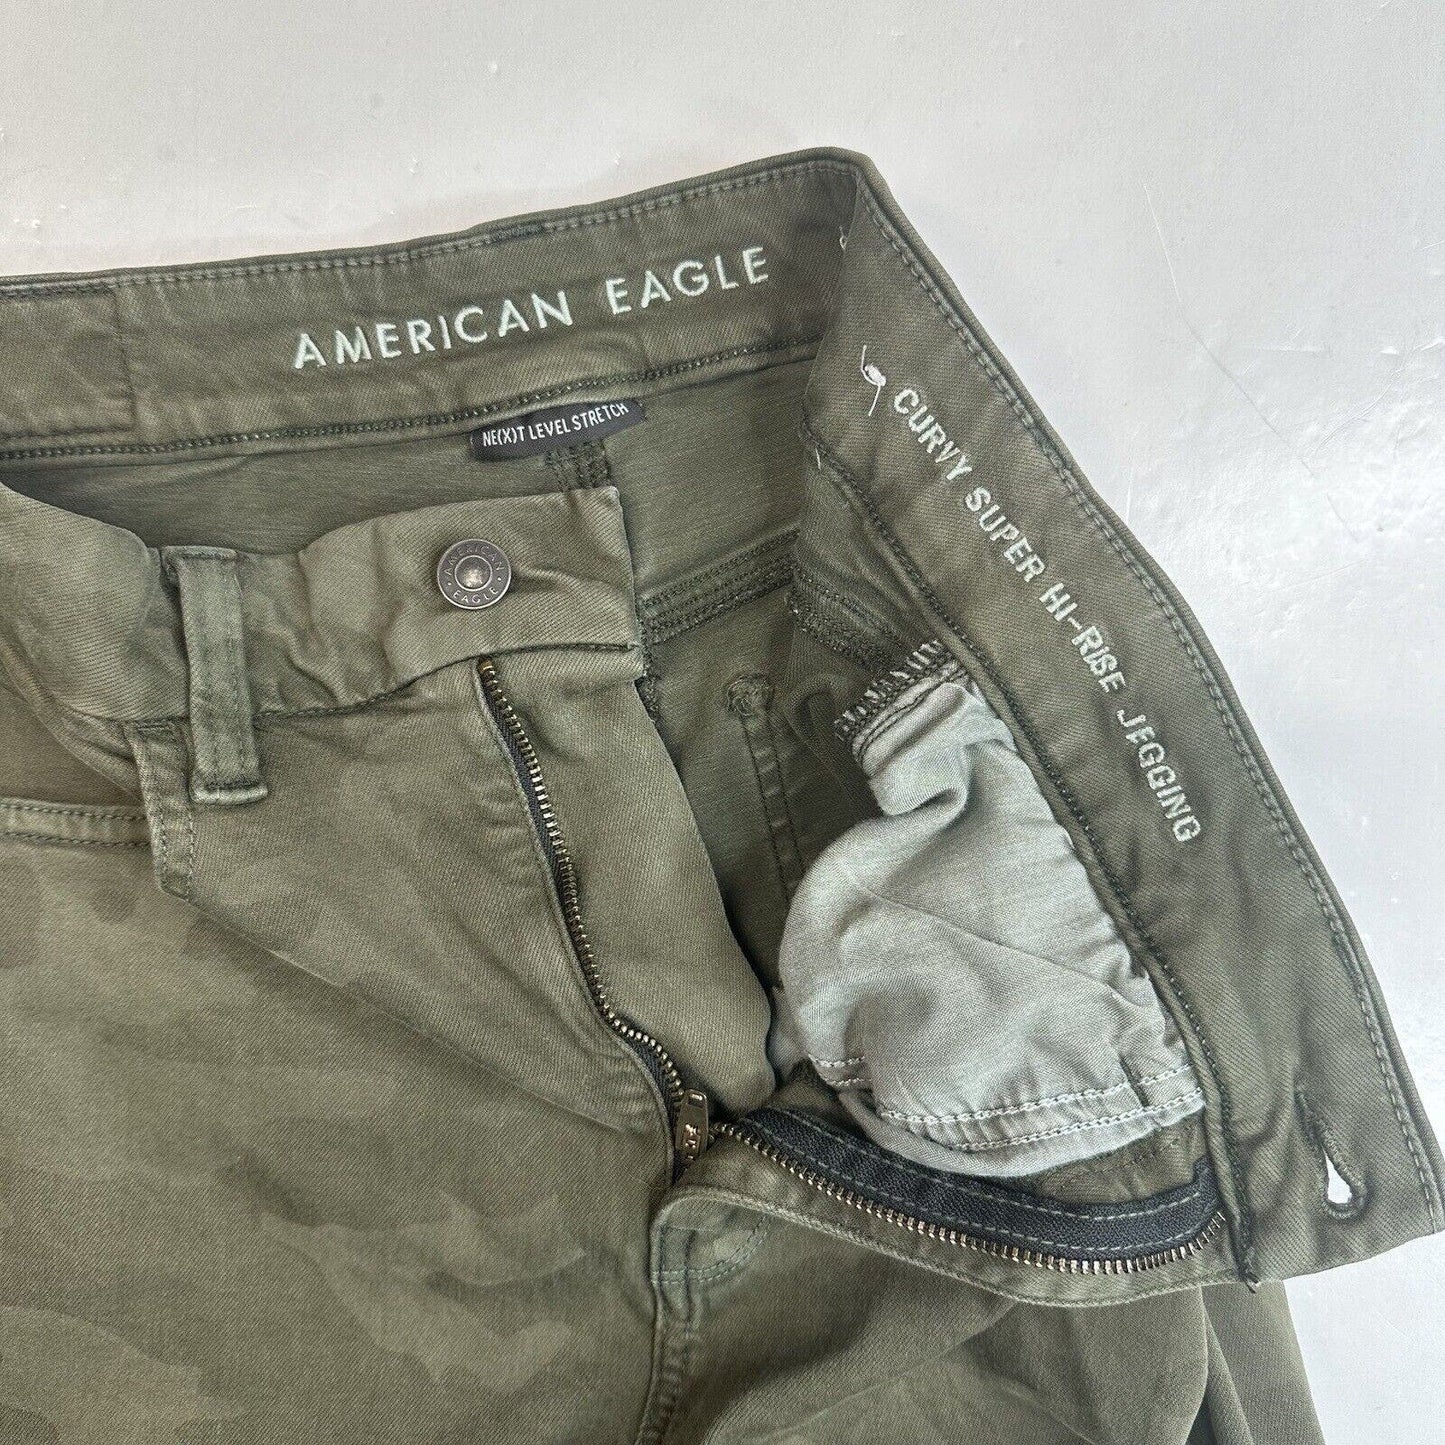 American Eagle Curvy Super Hi-Rise Jegging 8 Green Camo Next Level Stretch Jeans